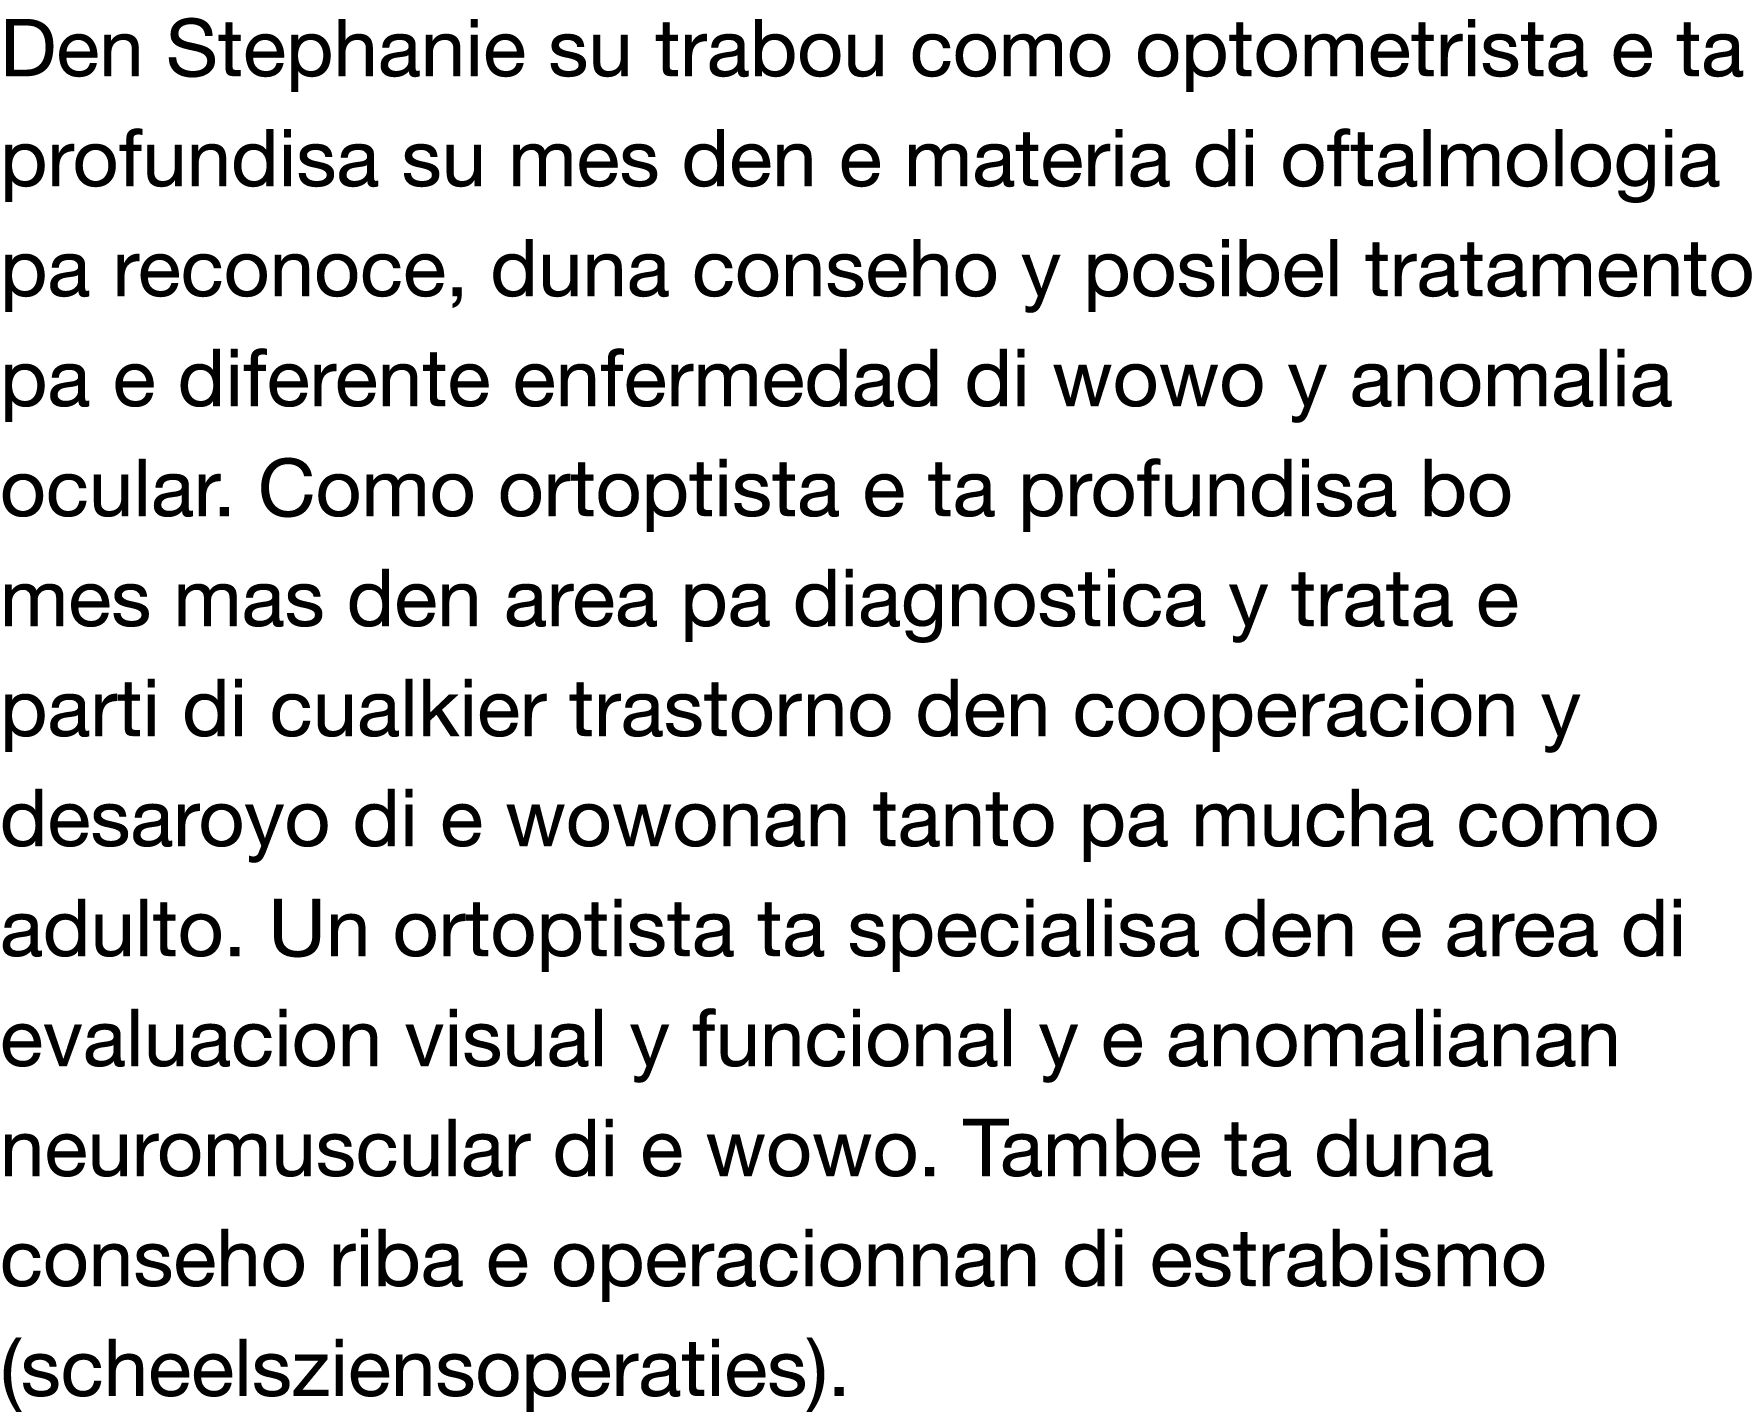 Den Stephanie su trabou como optometrista e ta profundisa su mes den e materia di oftalmologia pa reconoce, duna cons   